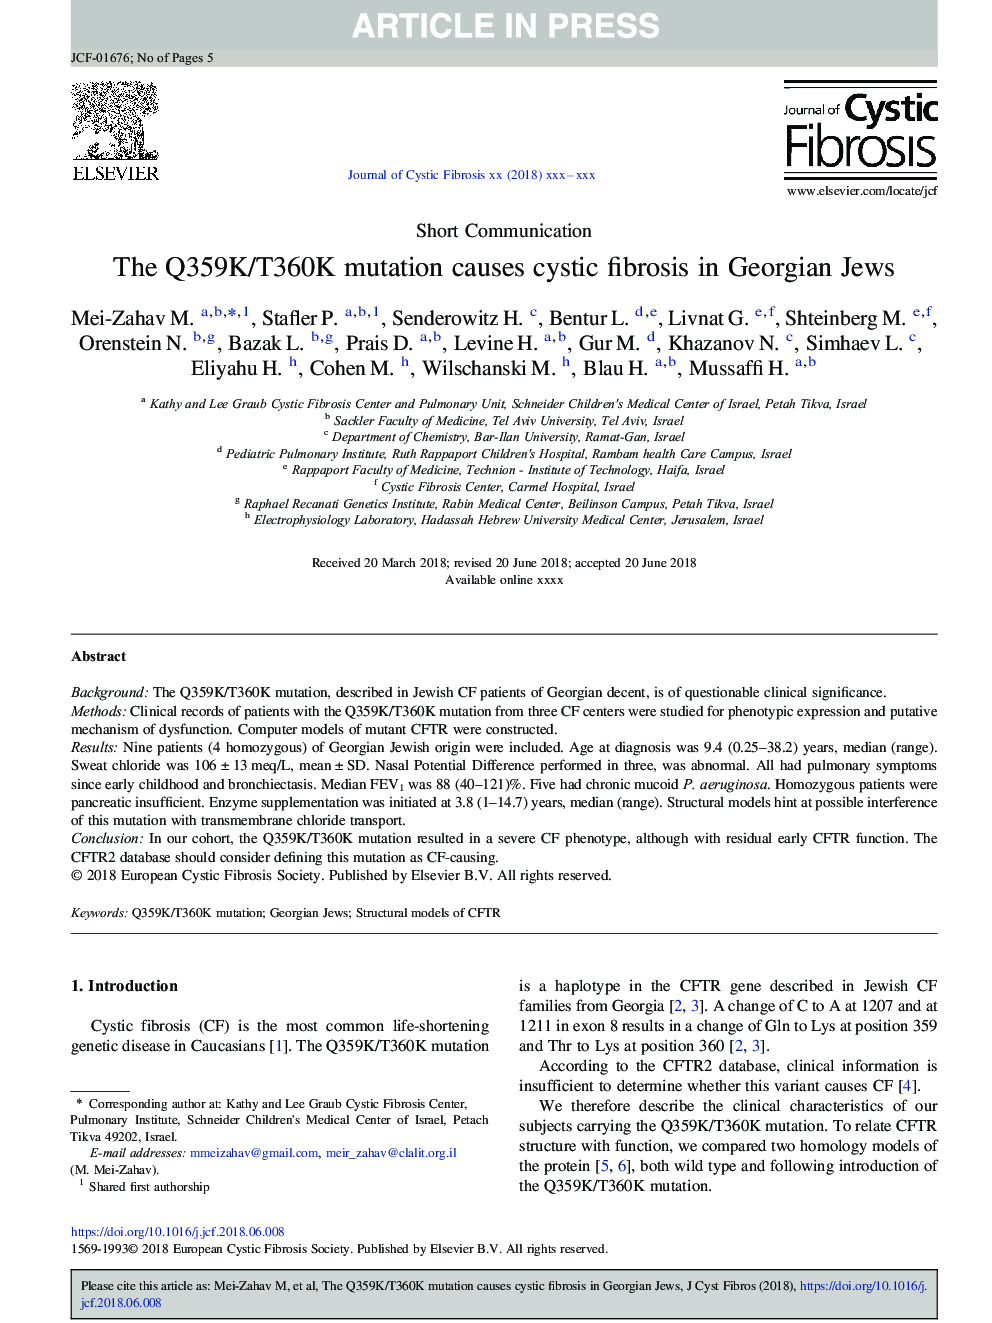 The Q359K/T360K mutation causes cystic fibrosis in Georgian Jews